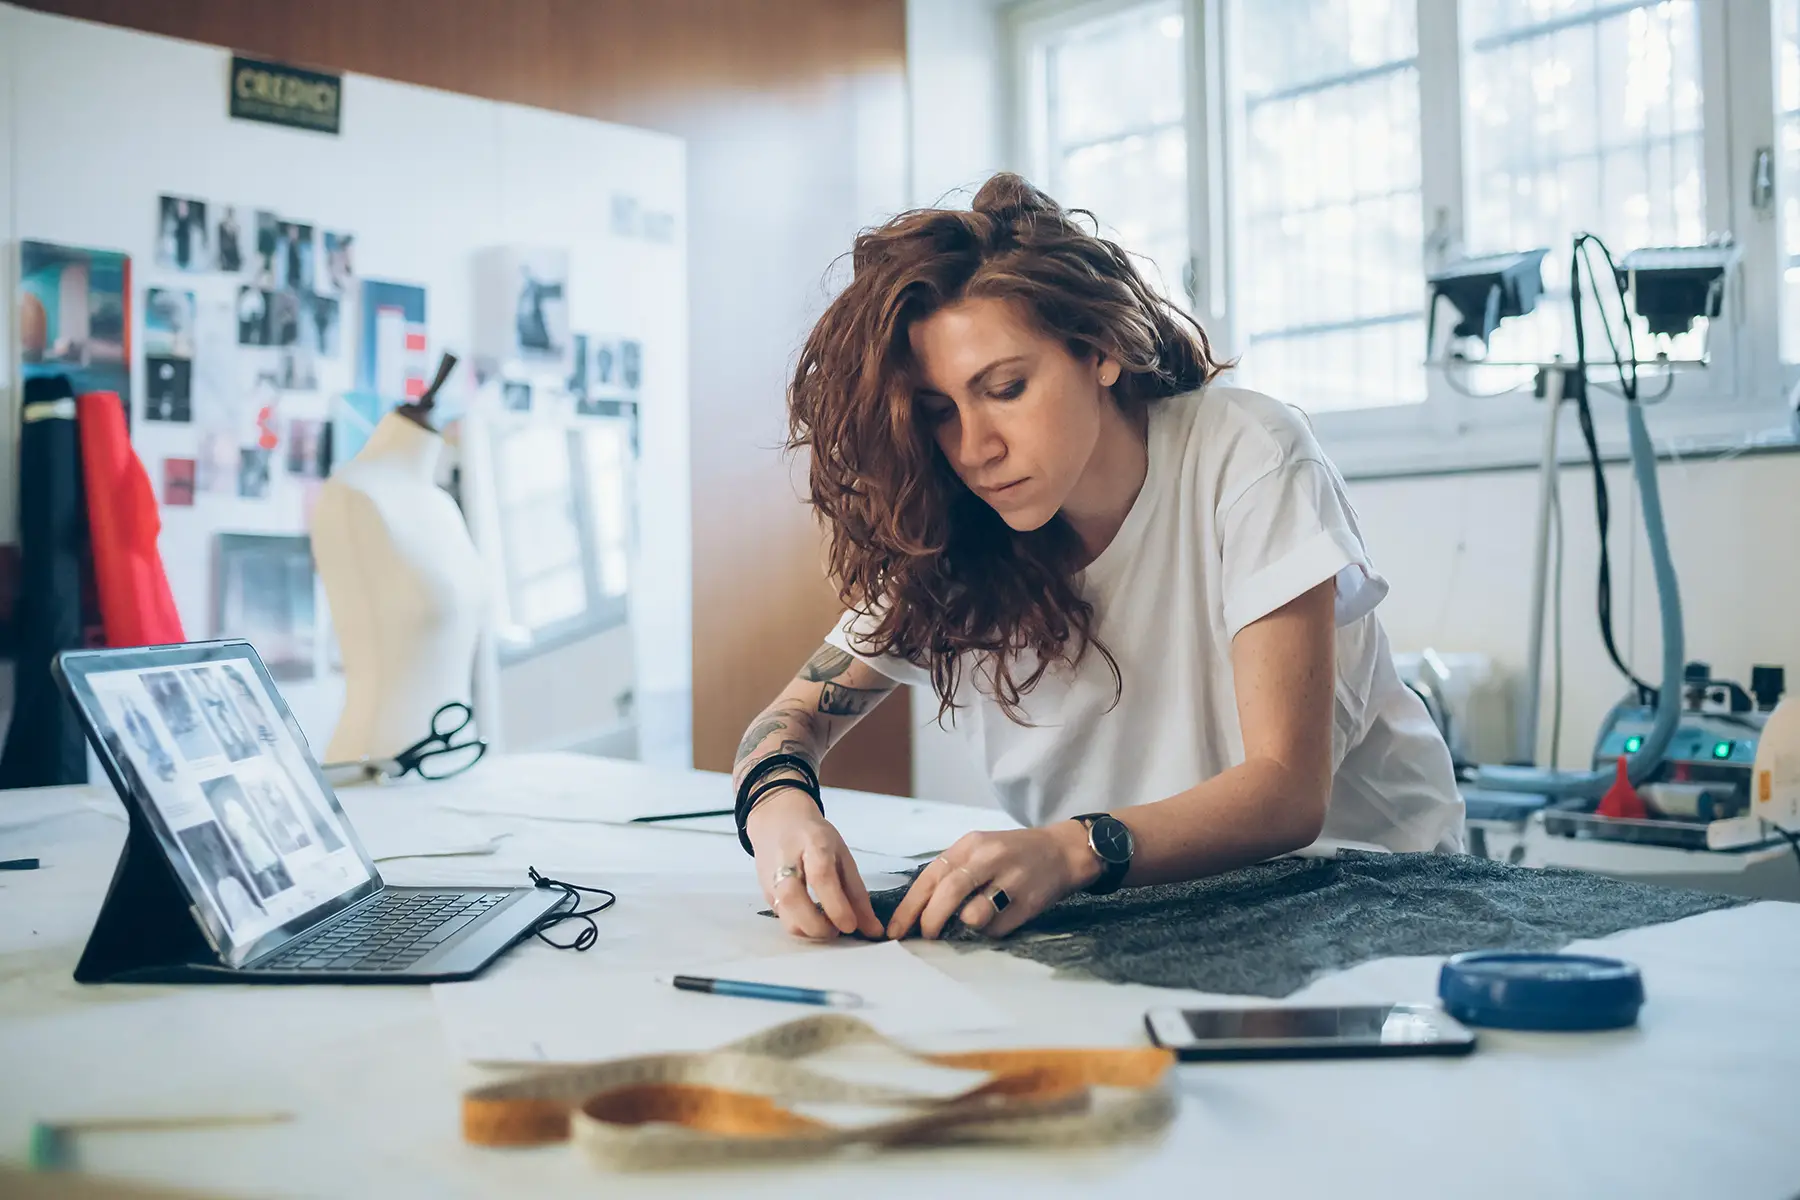 A fashion designer working at a desk